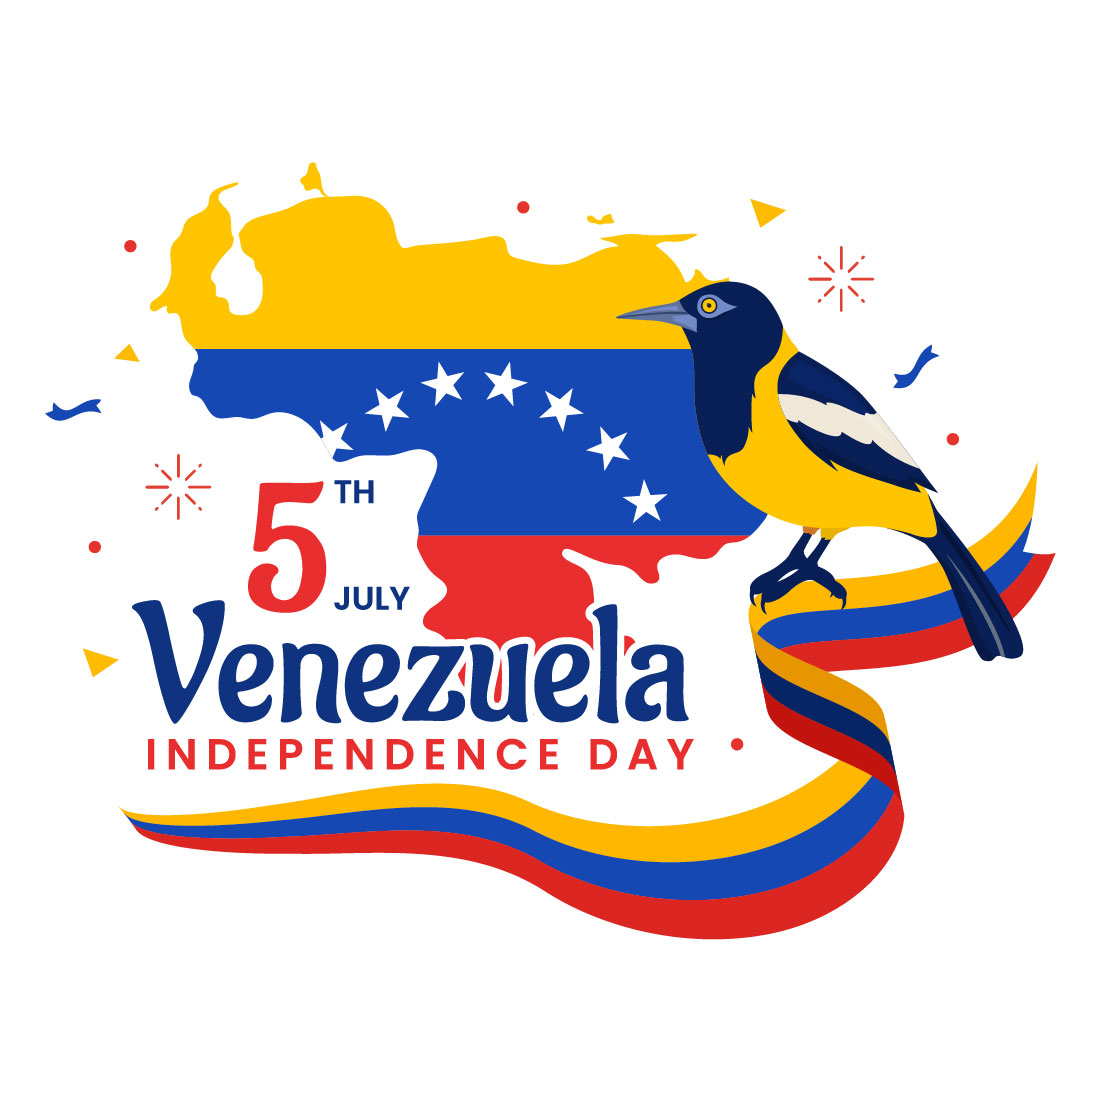 13 Venezuela Independence Day Illustration cover image.